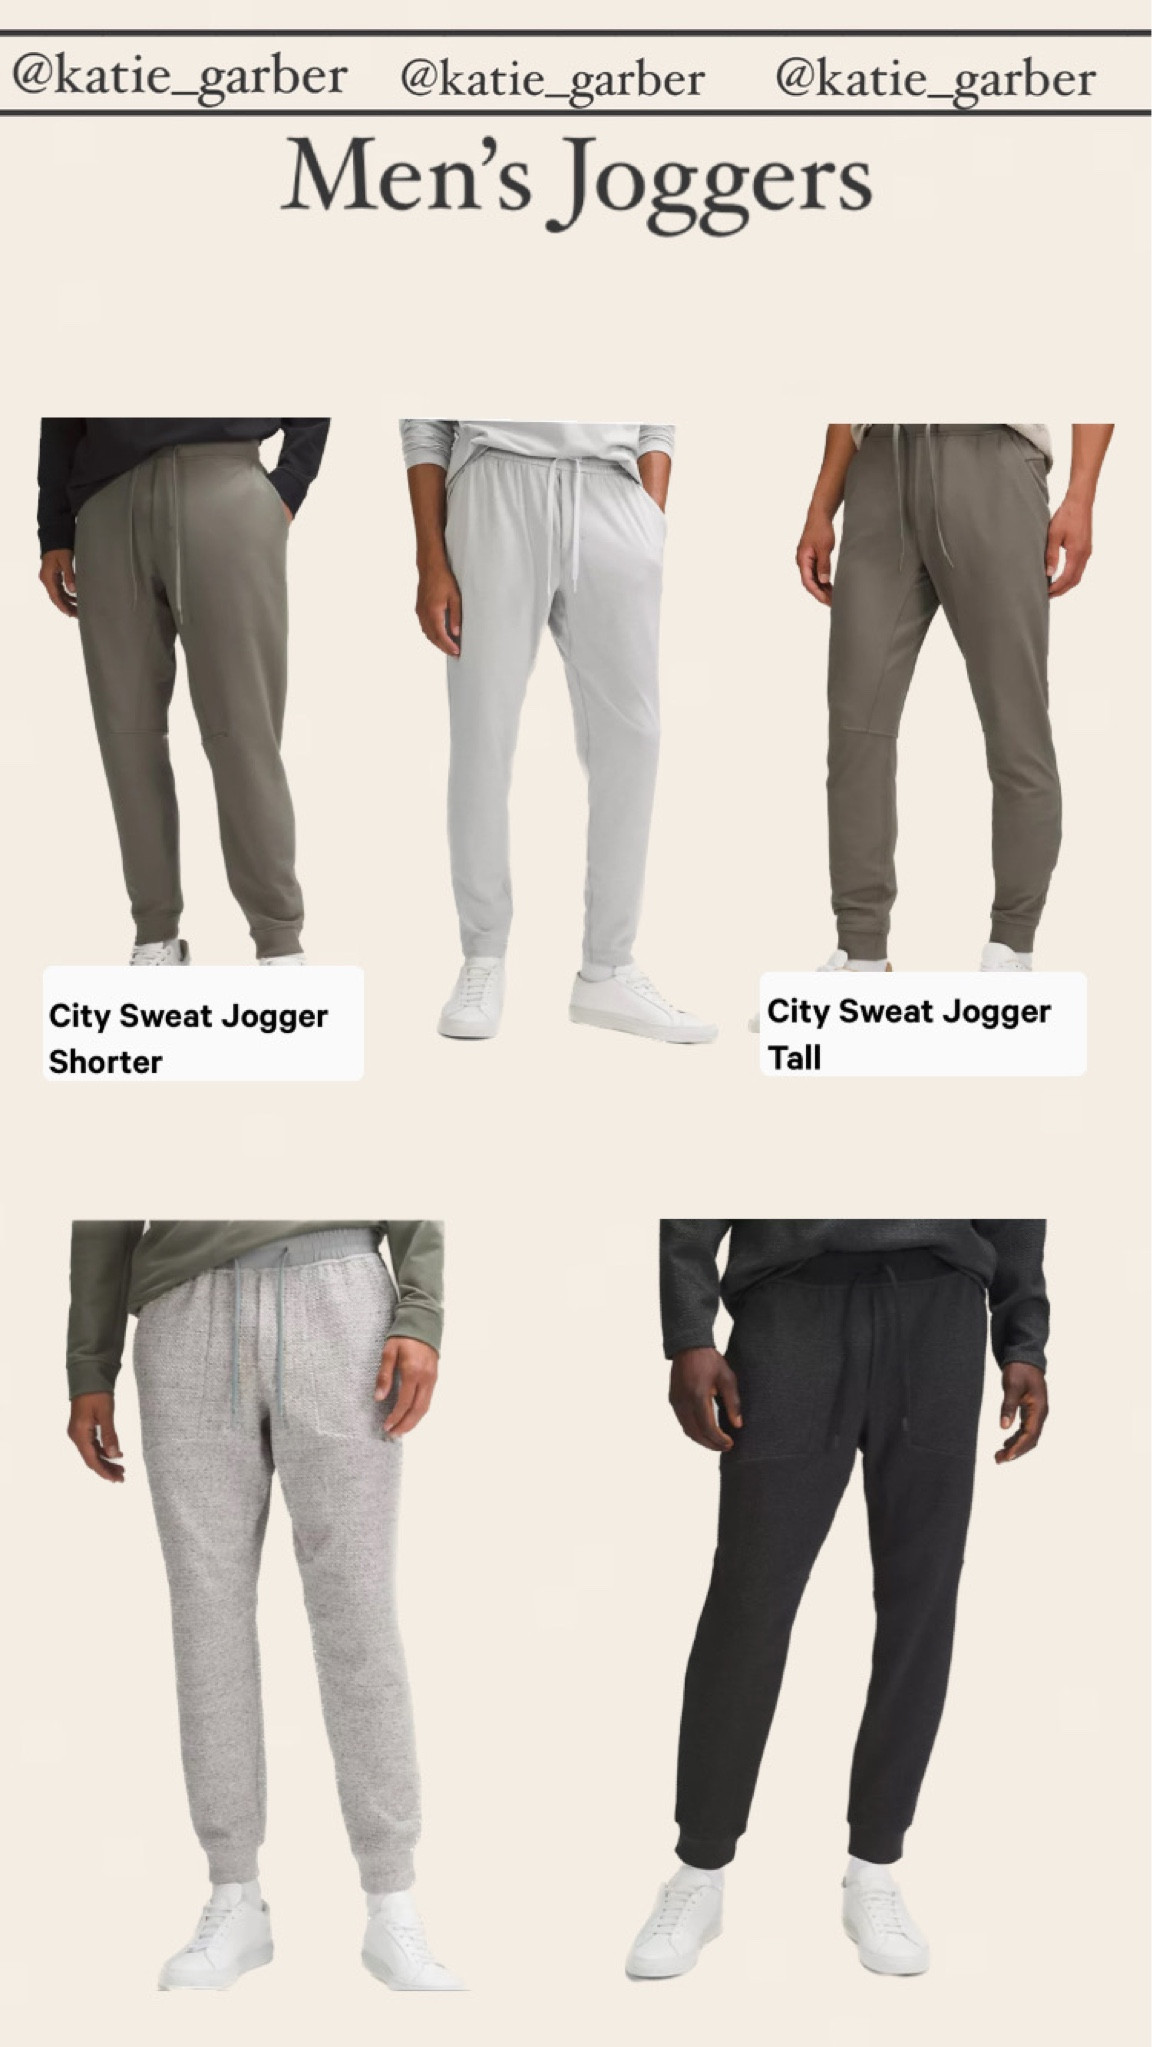 City Sweat Jogger *Shorter, Men's Joggers